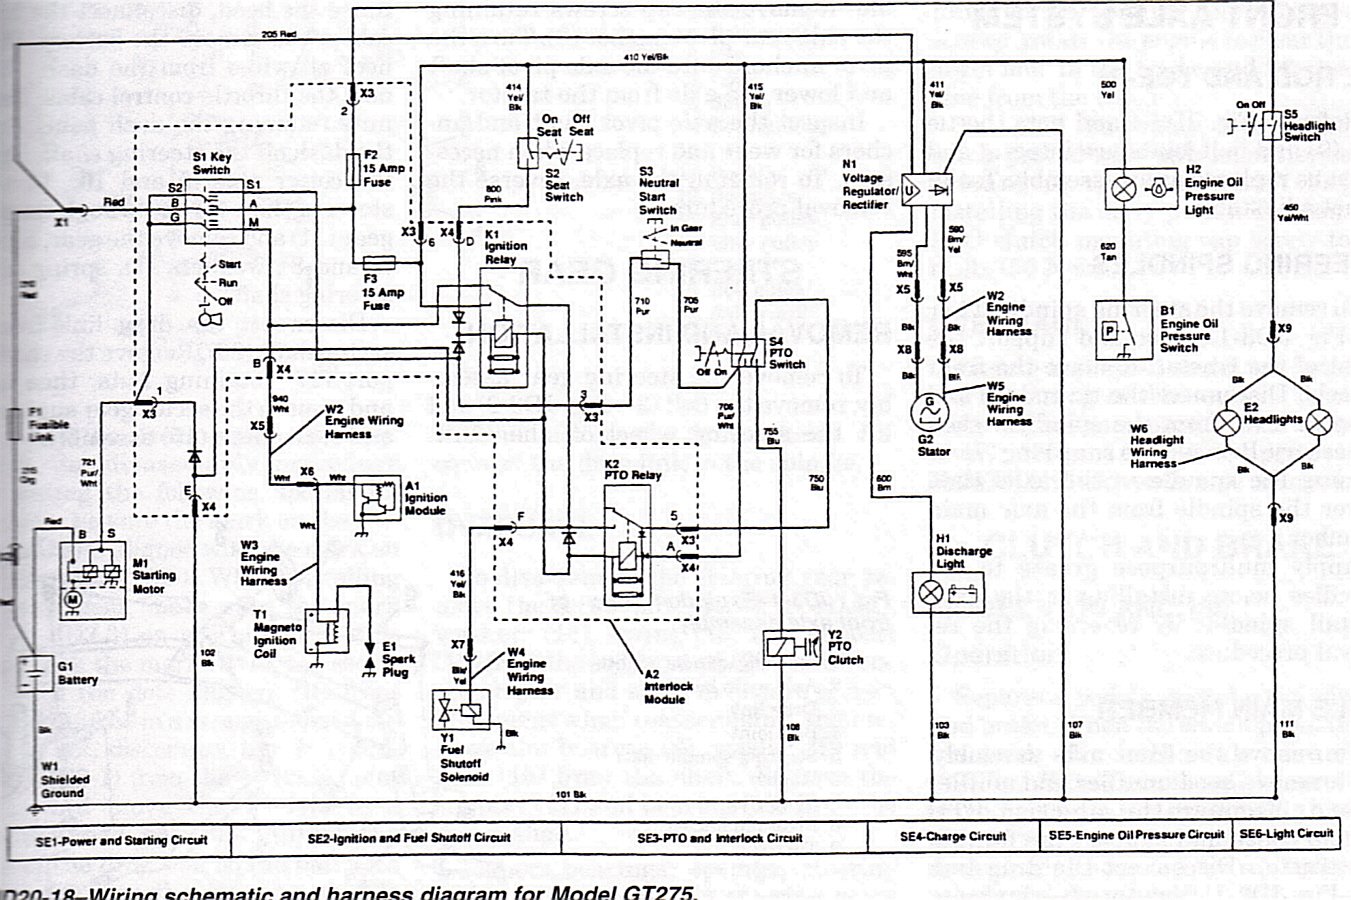 John Deere F910 Wiring Diagram